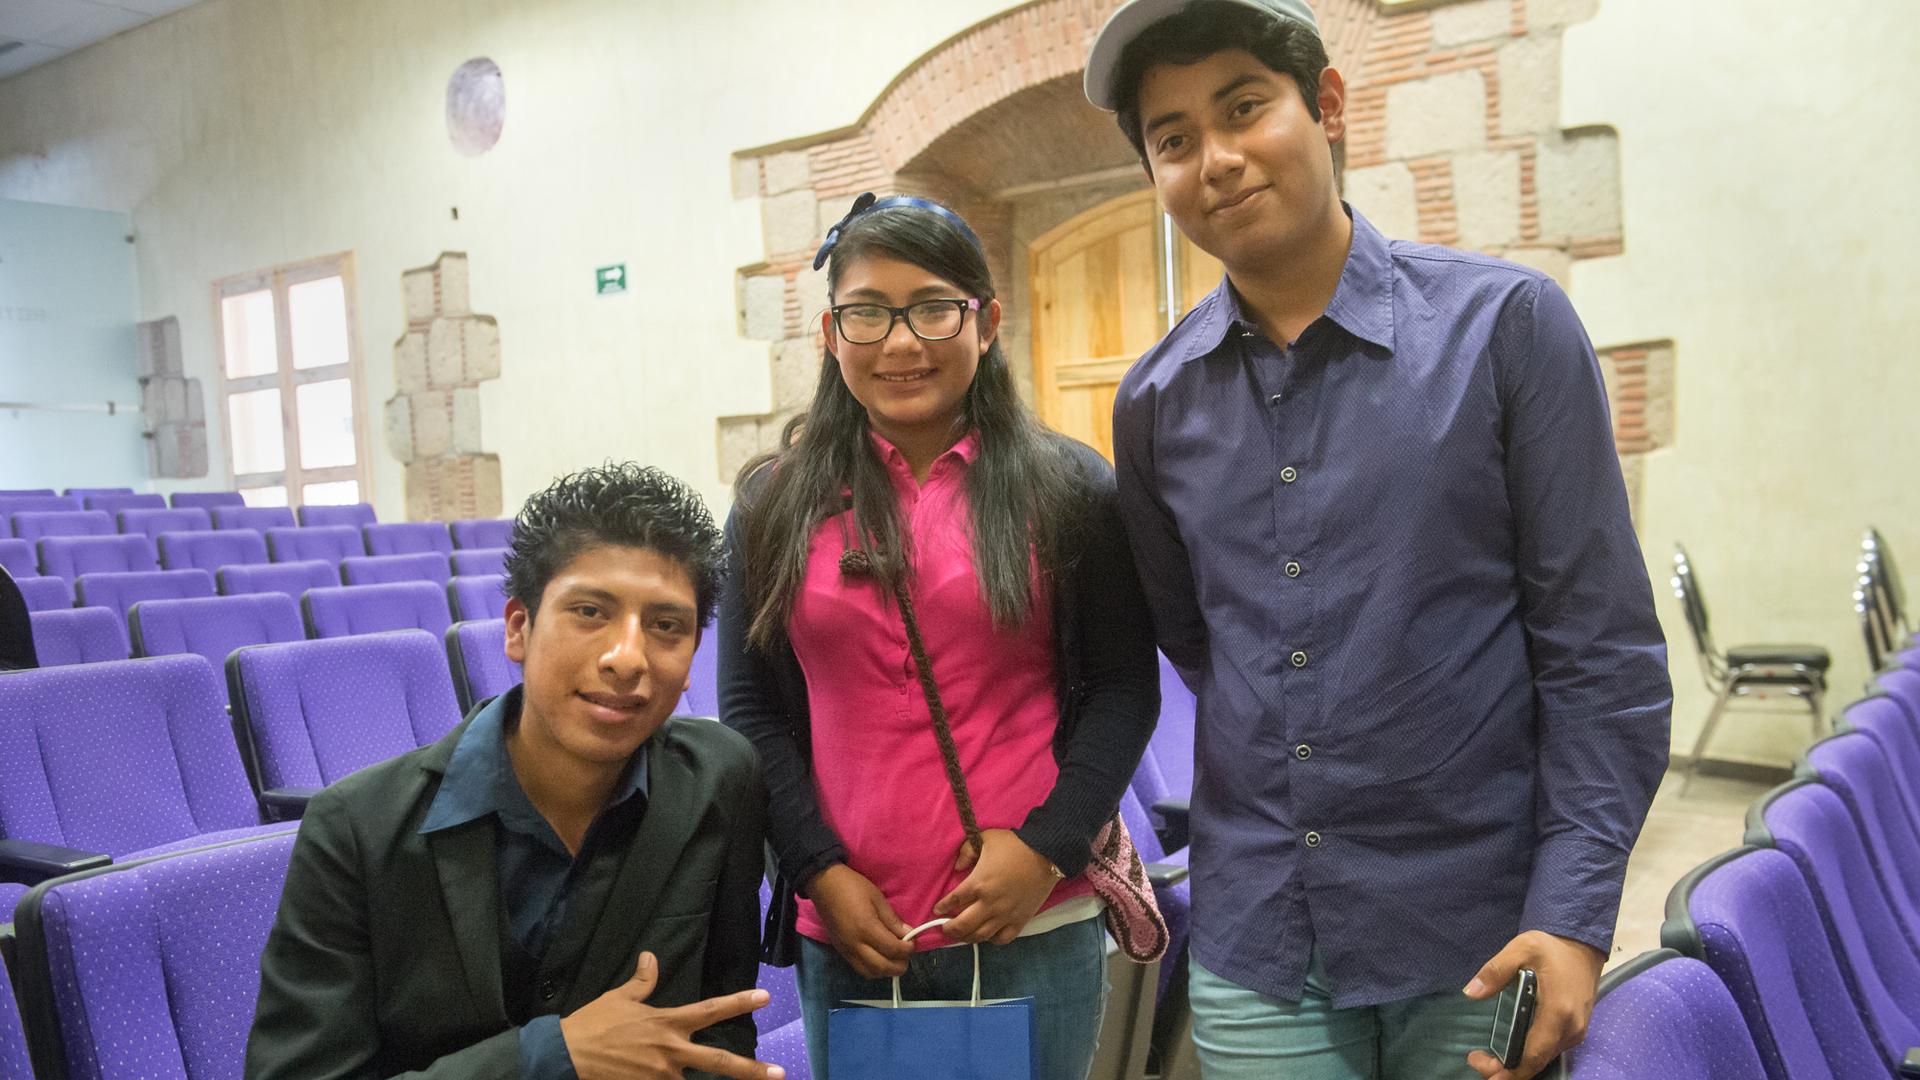 Three teens between a row of purple auditorium chairs